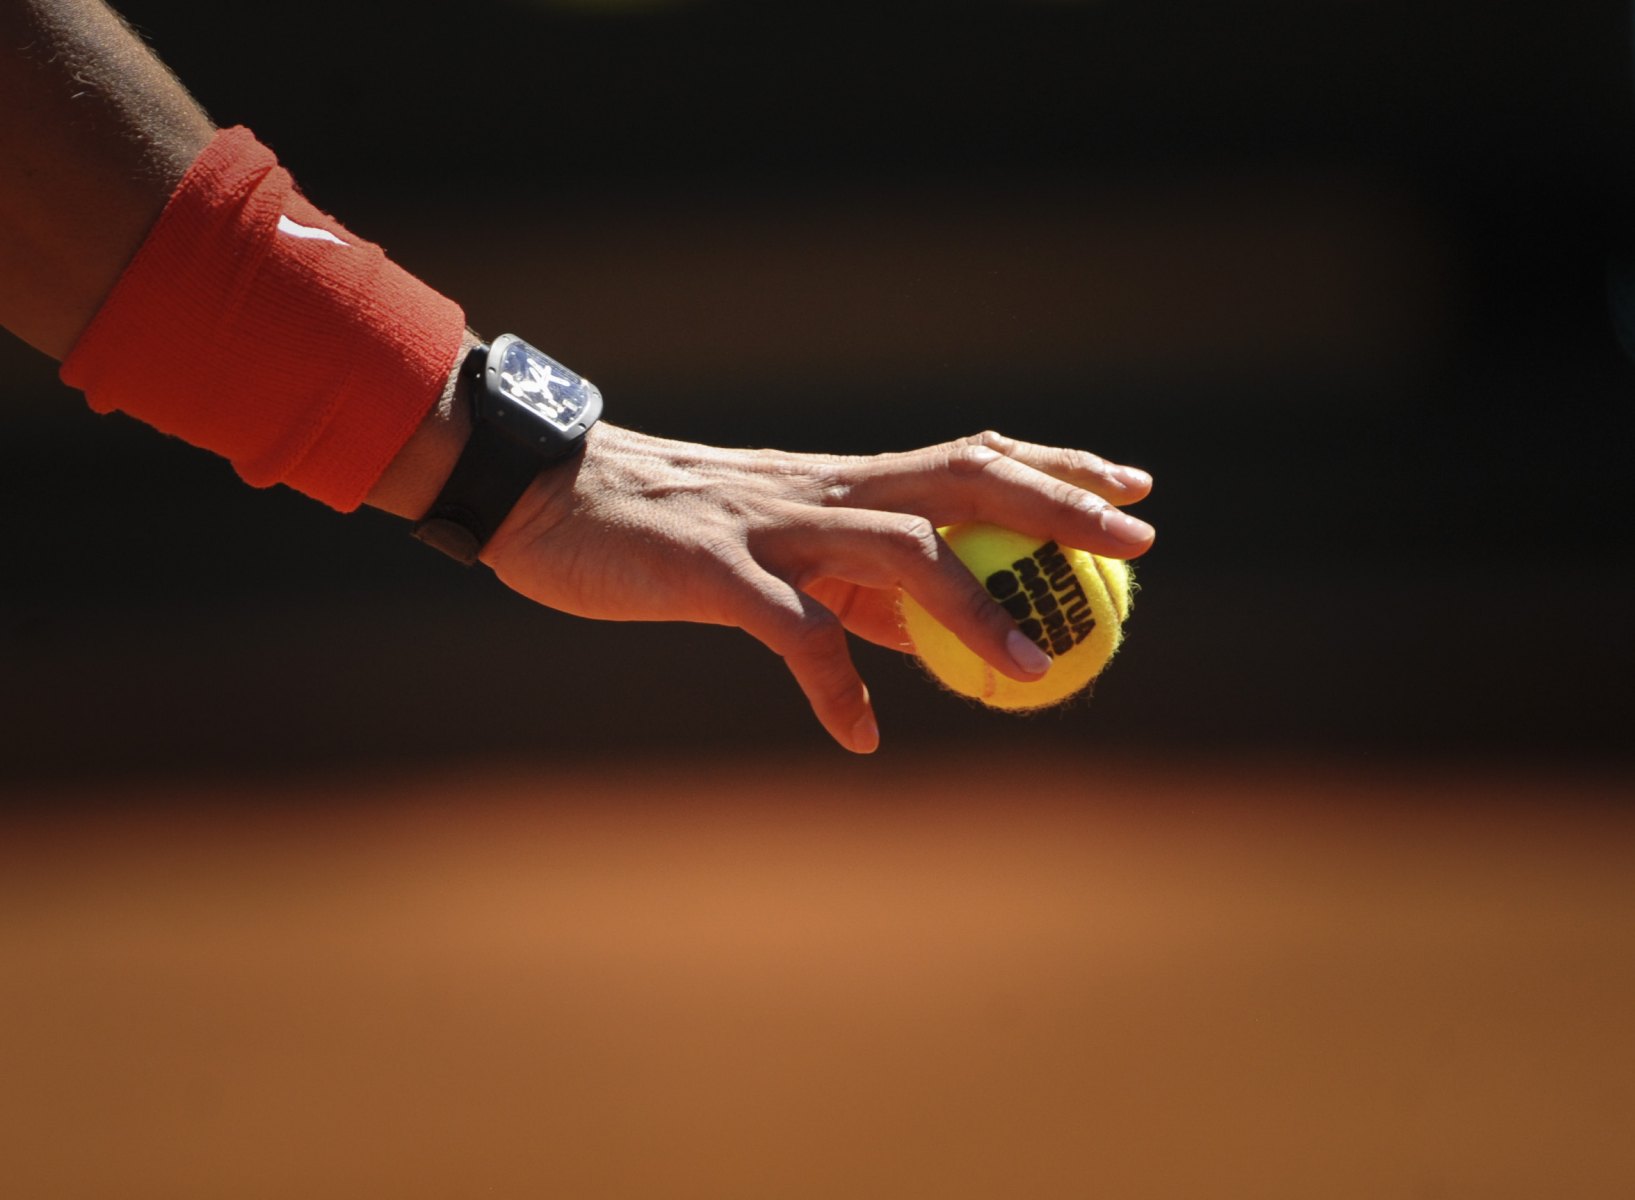 Tenis - Caja Magica - Madrid Open 2013 - RAFAEL NADAL - Foto: Gonzalez-Cebrian